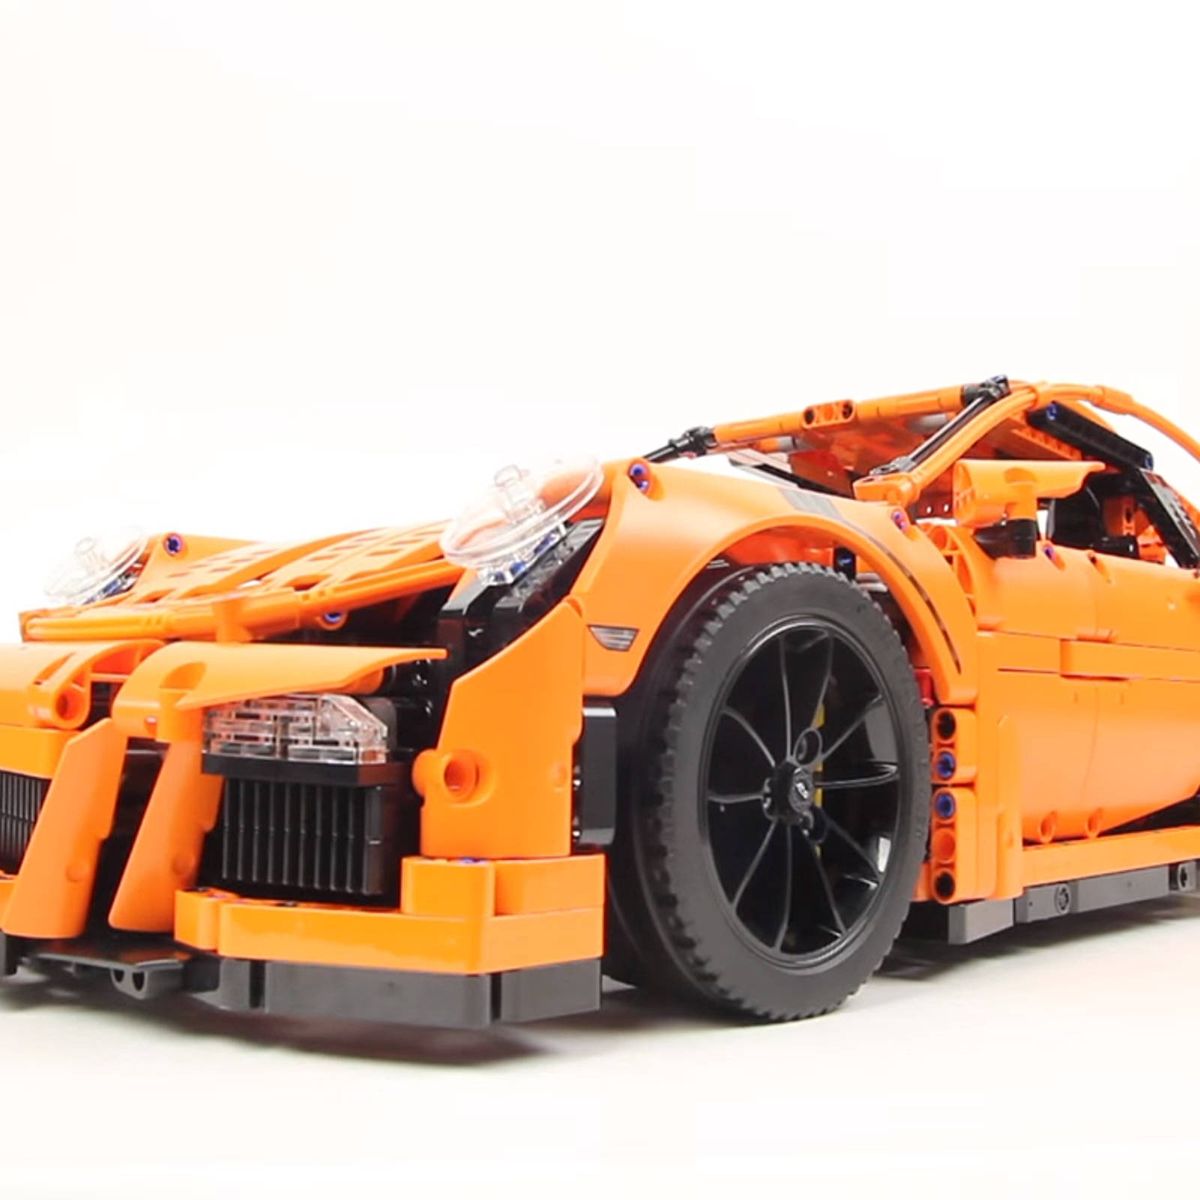 LEGO TECHNIC 42056 Porsche 911 GT3 RS - Speed Build for Collecrors